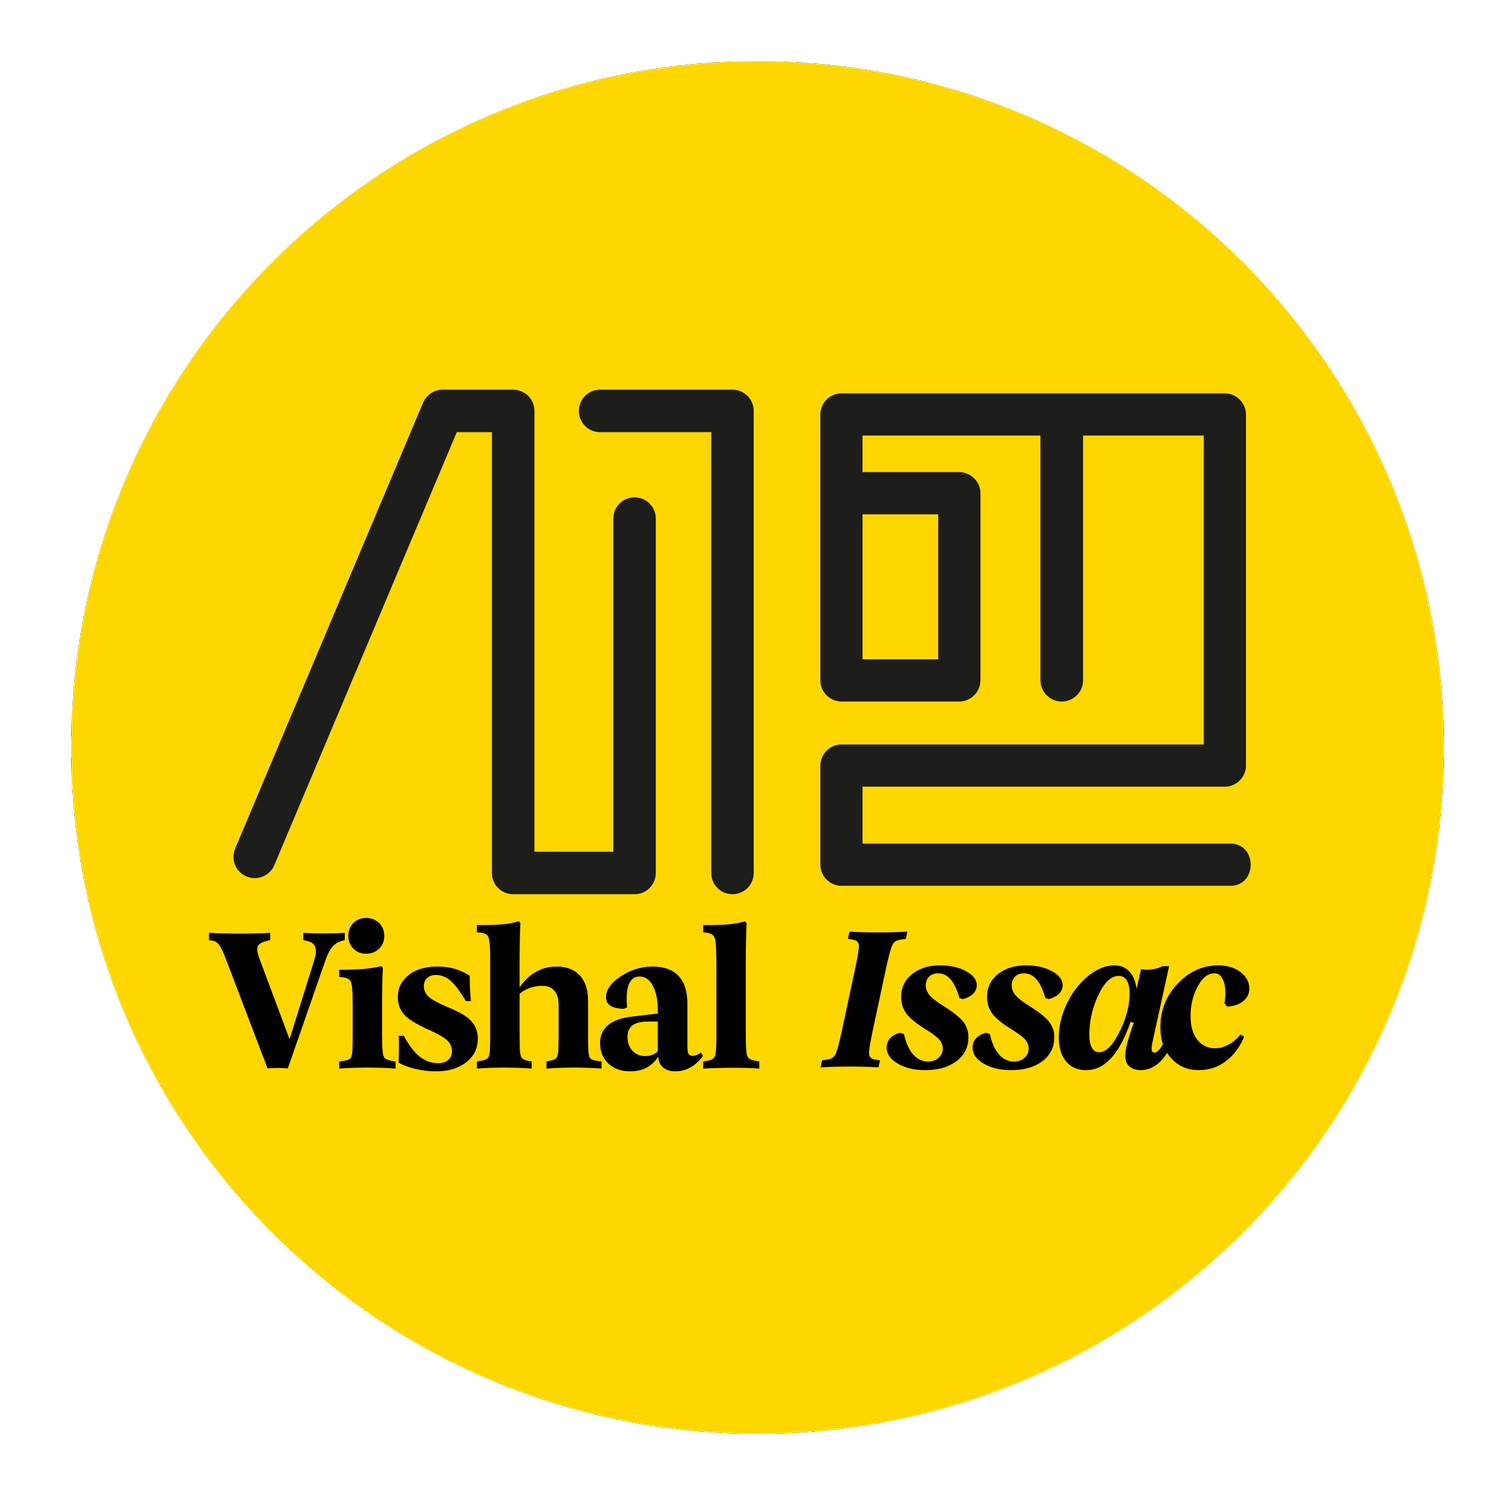 Vishal Issac